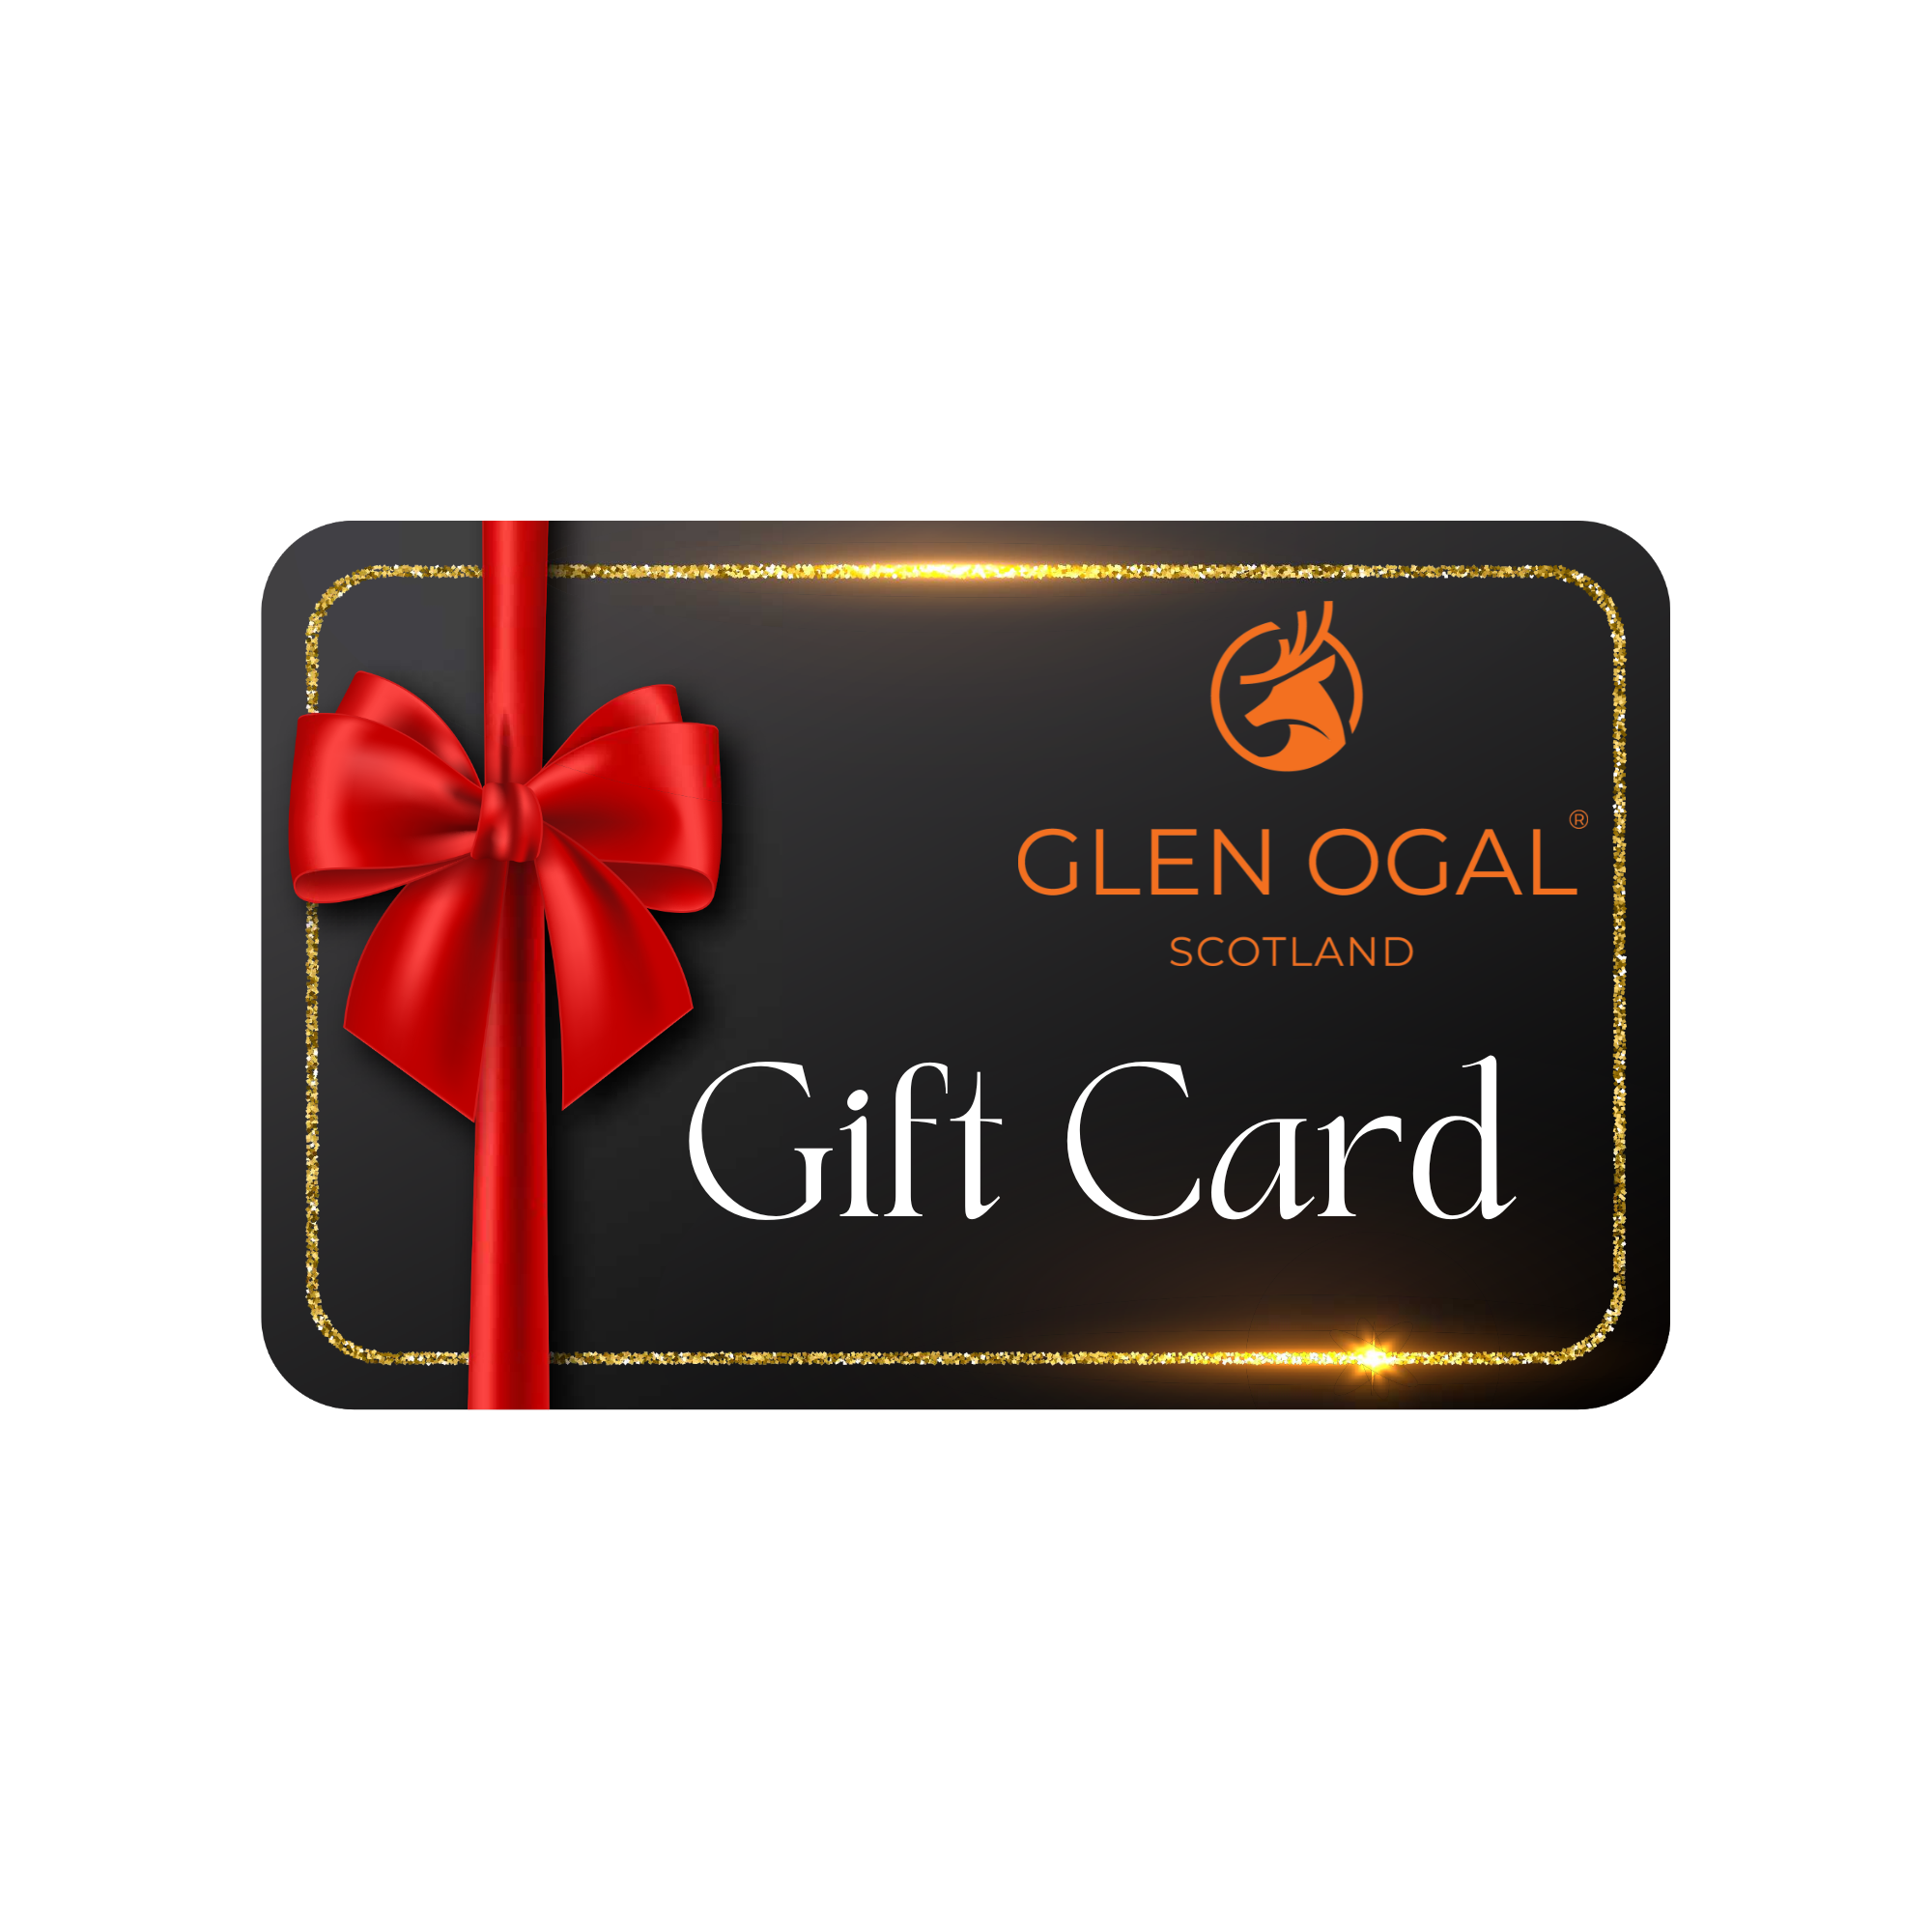 Glen Ogal Gift Card